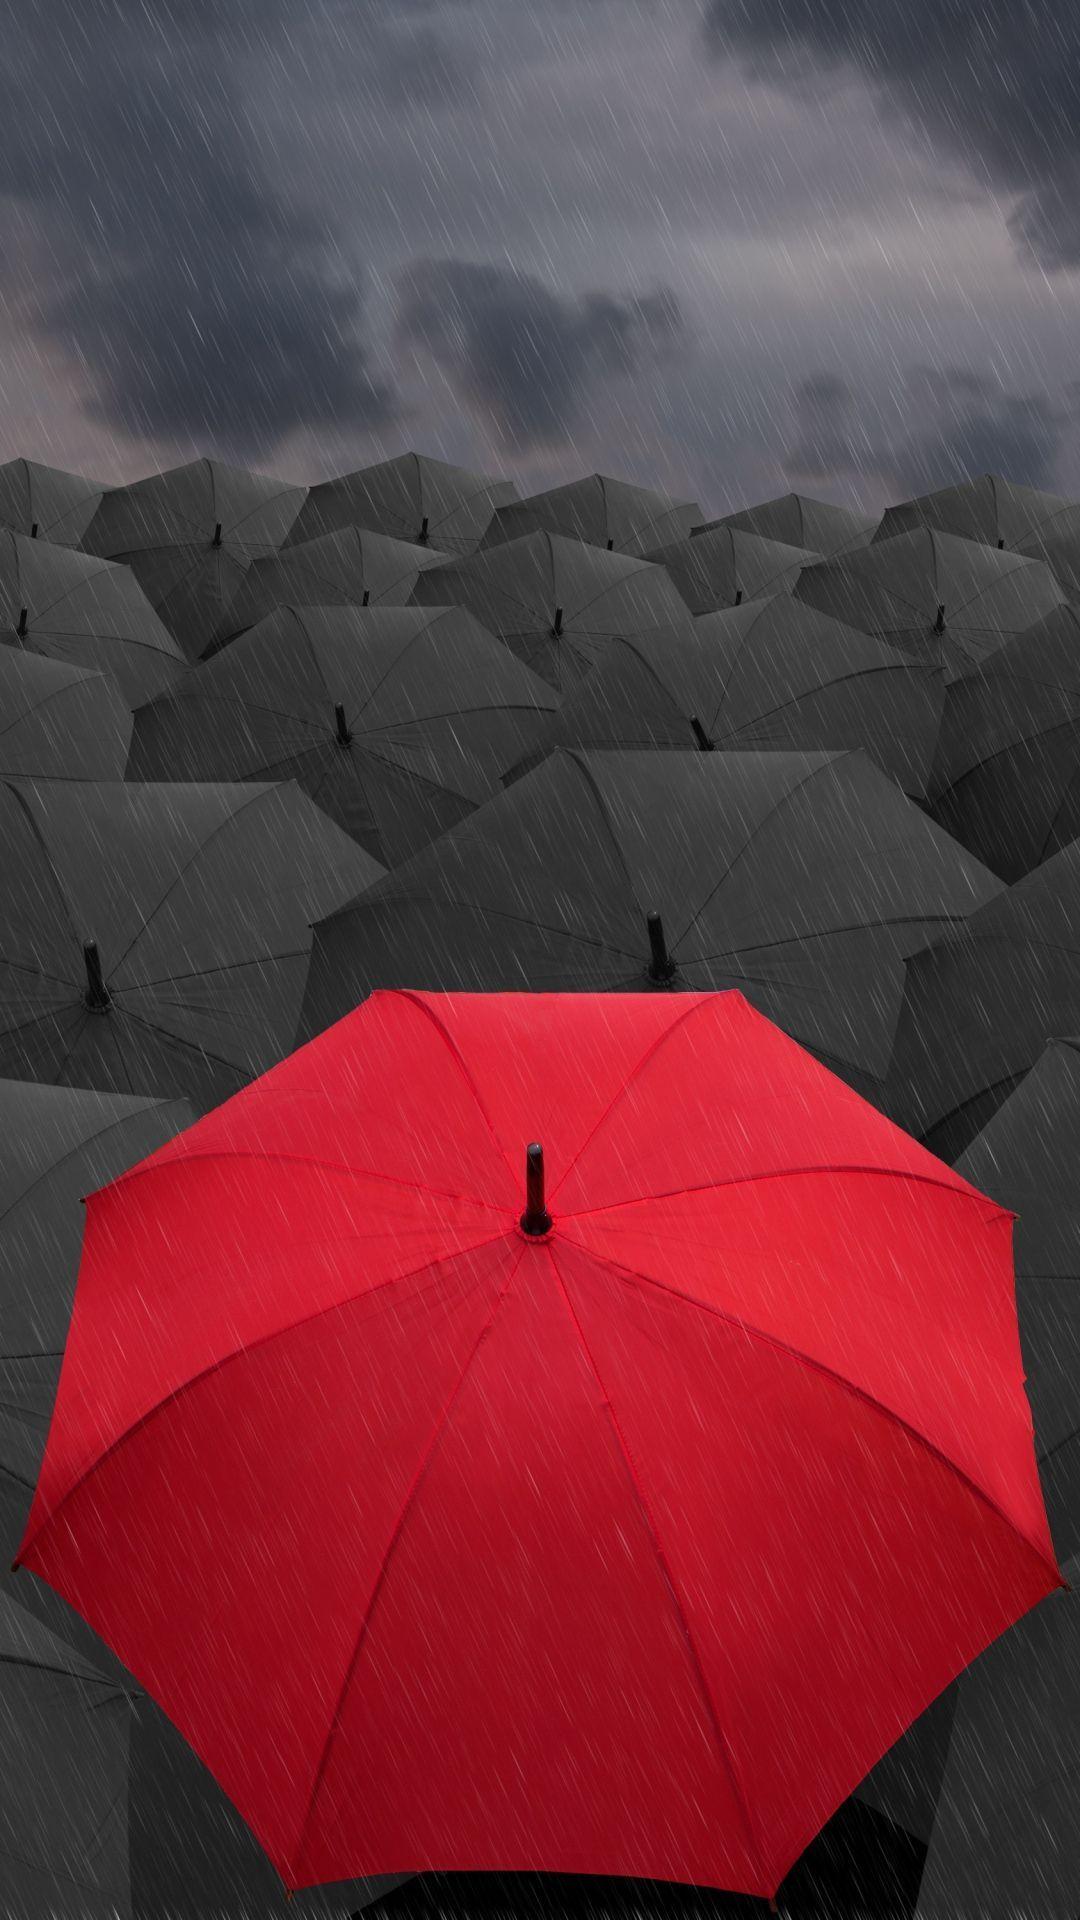 Umbrellas Rain Gray Red #iPhone #wallpaper. iPhone 8 wallpaper